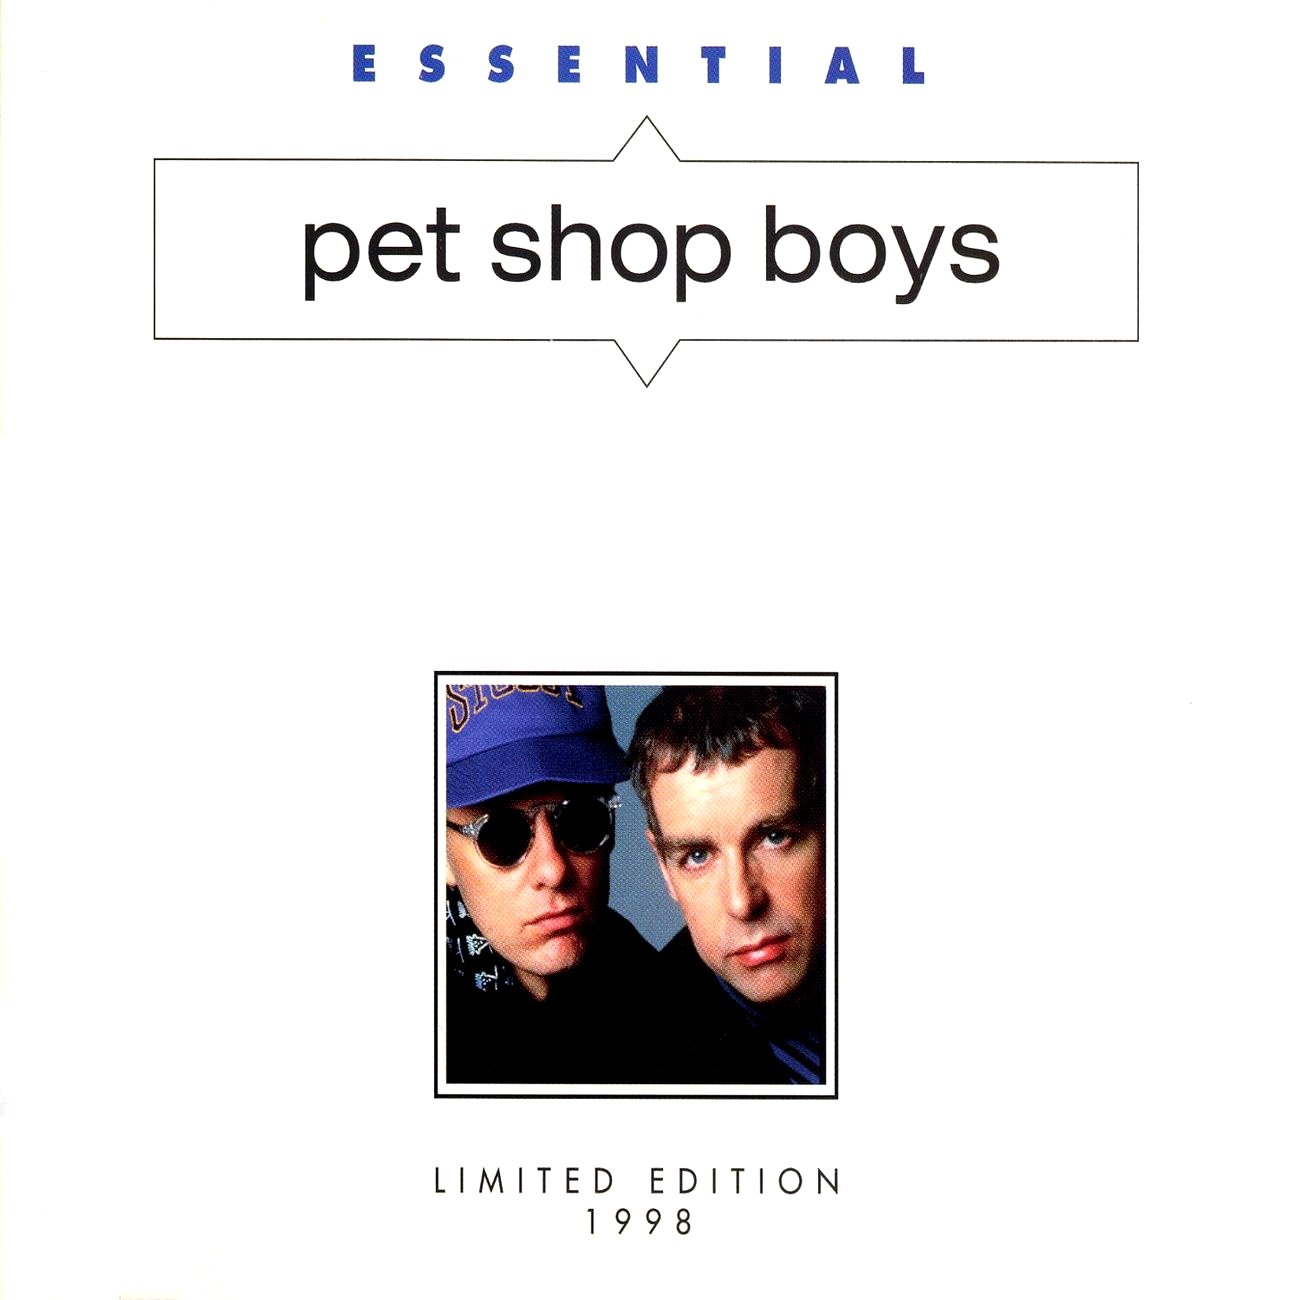 Pet shop boys being. Pet shop boys 1998. Pet shop boys Essential. Pet shop boys обложки альбомов. Pet shop boys обложка.